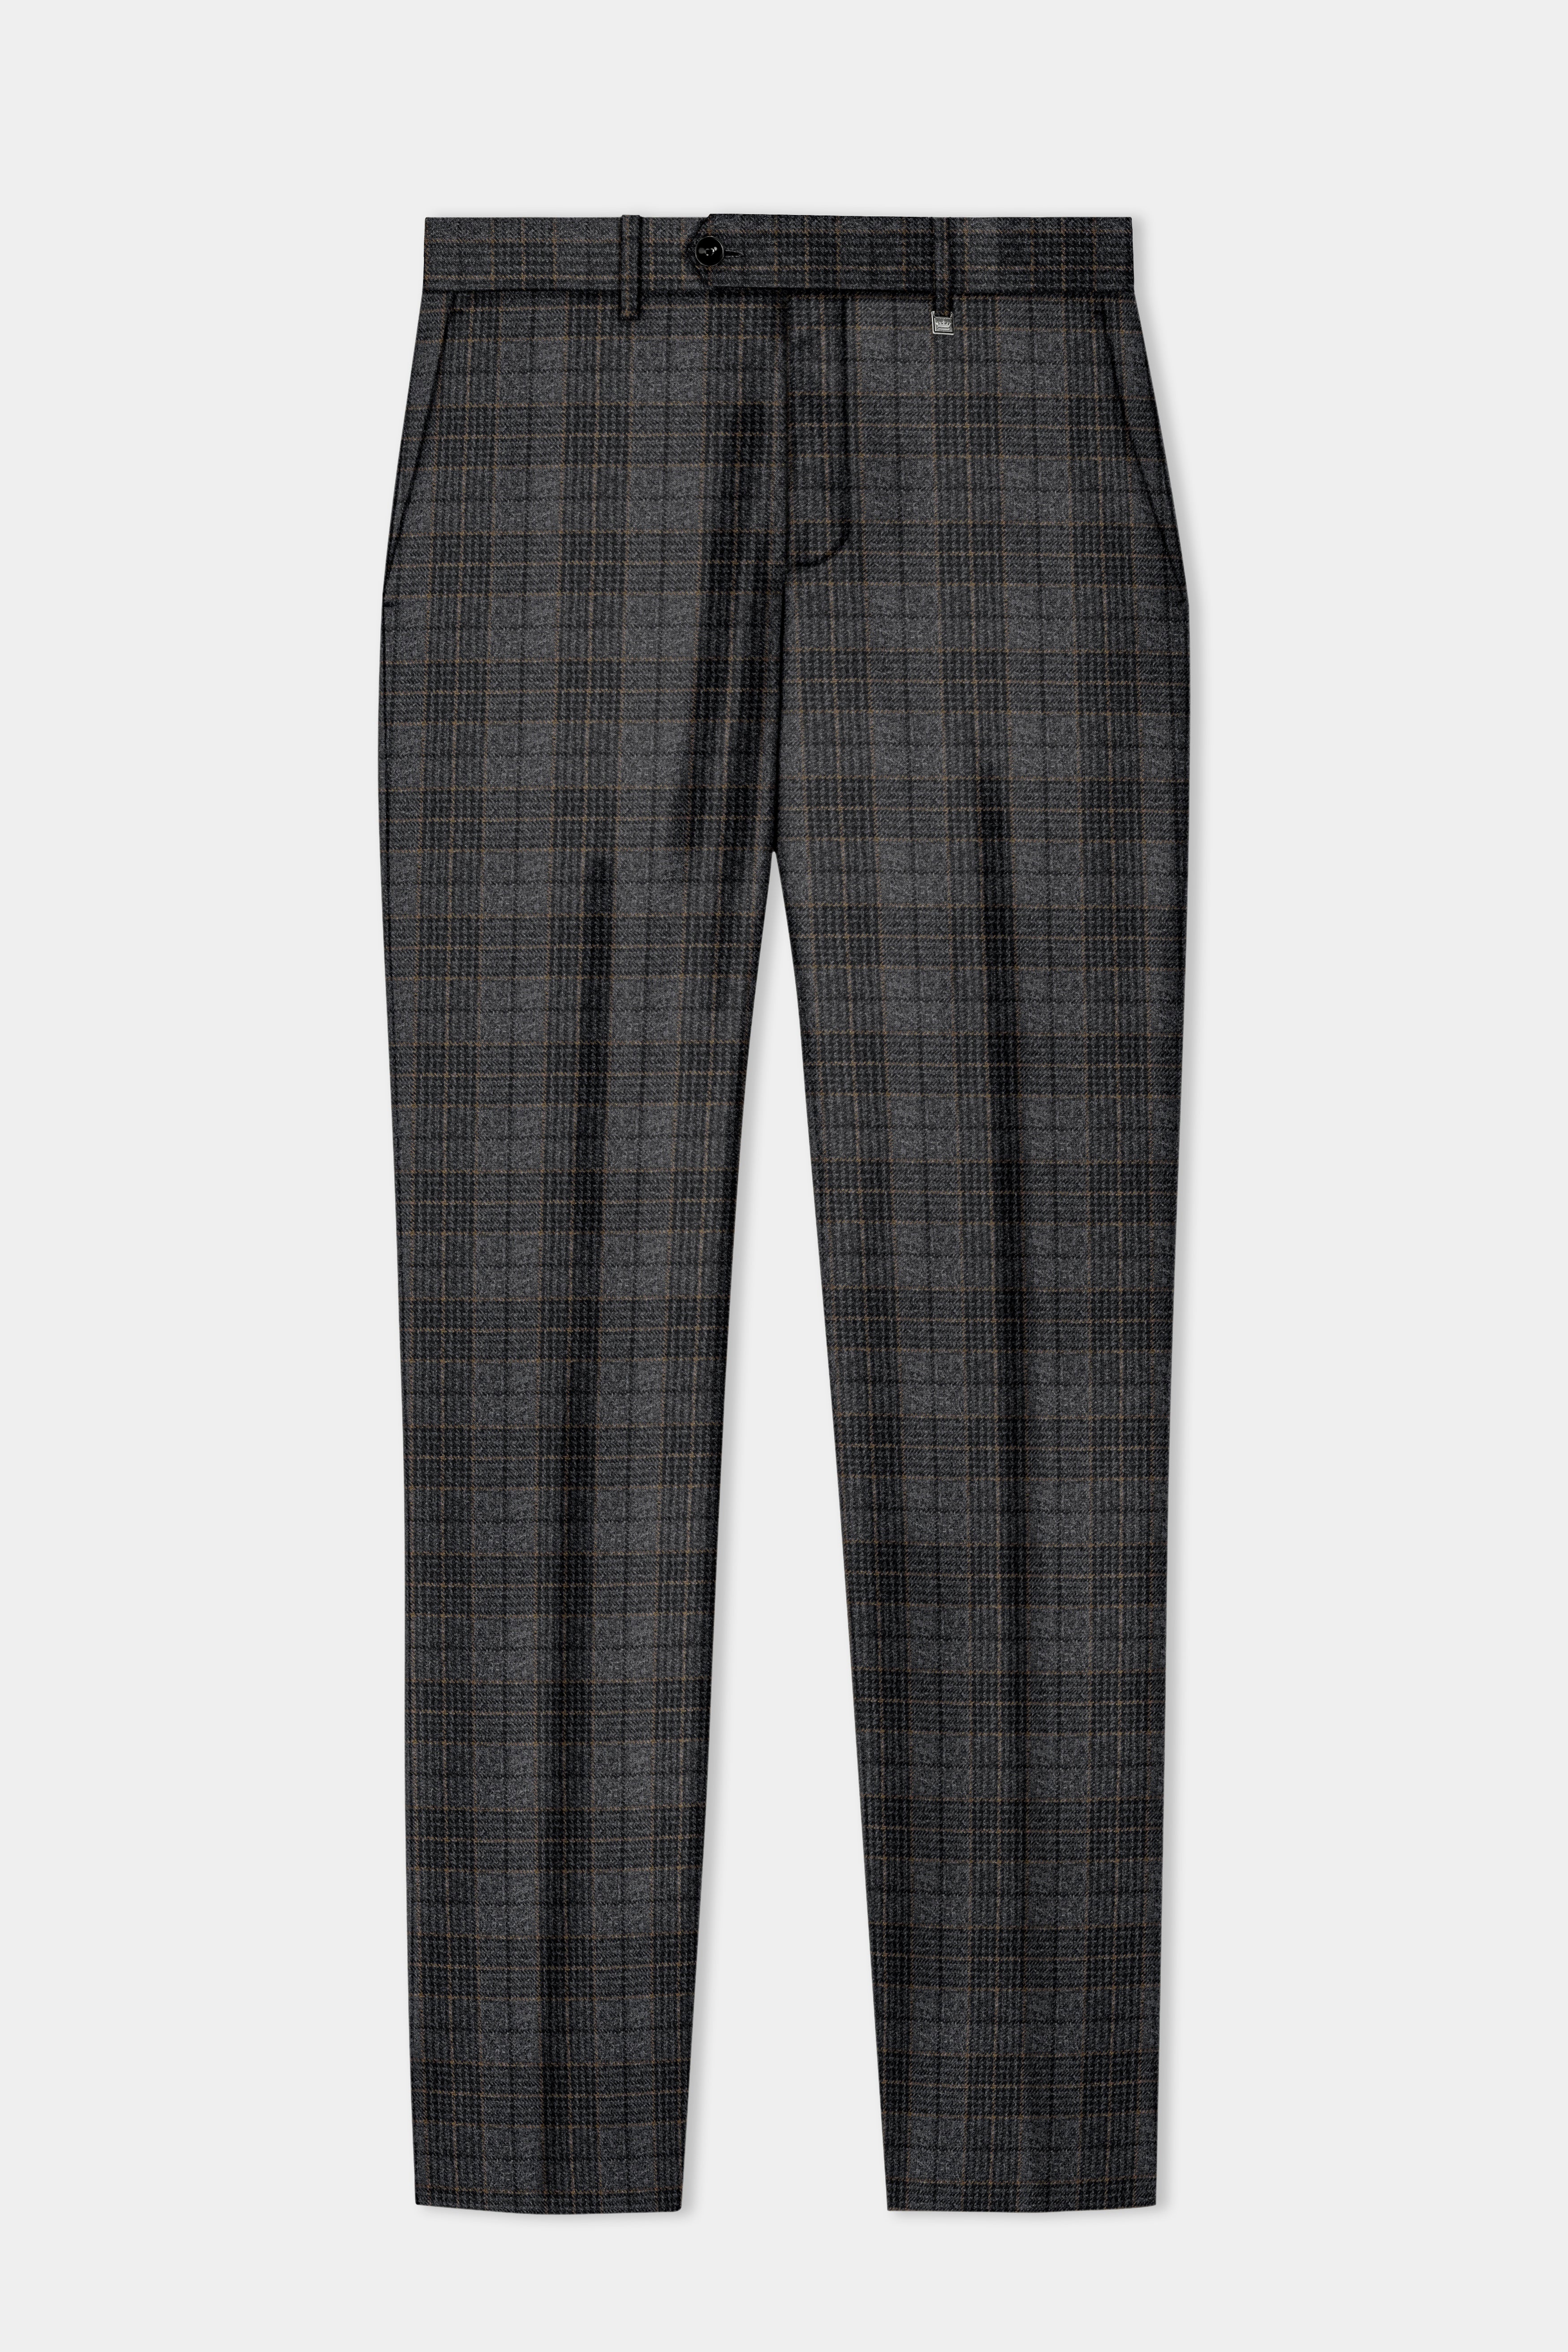 Charcoal Gray Plaid Tweed Pant